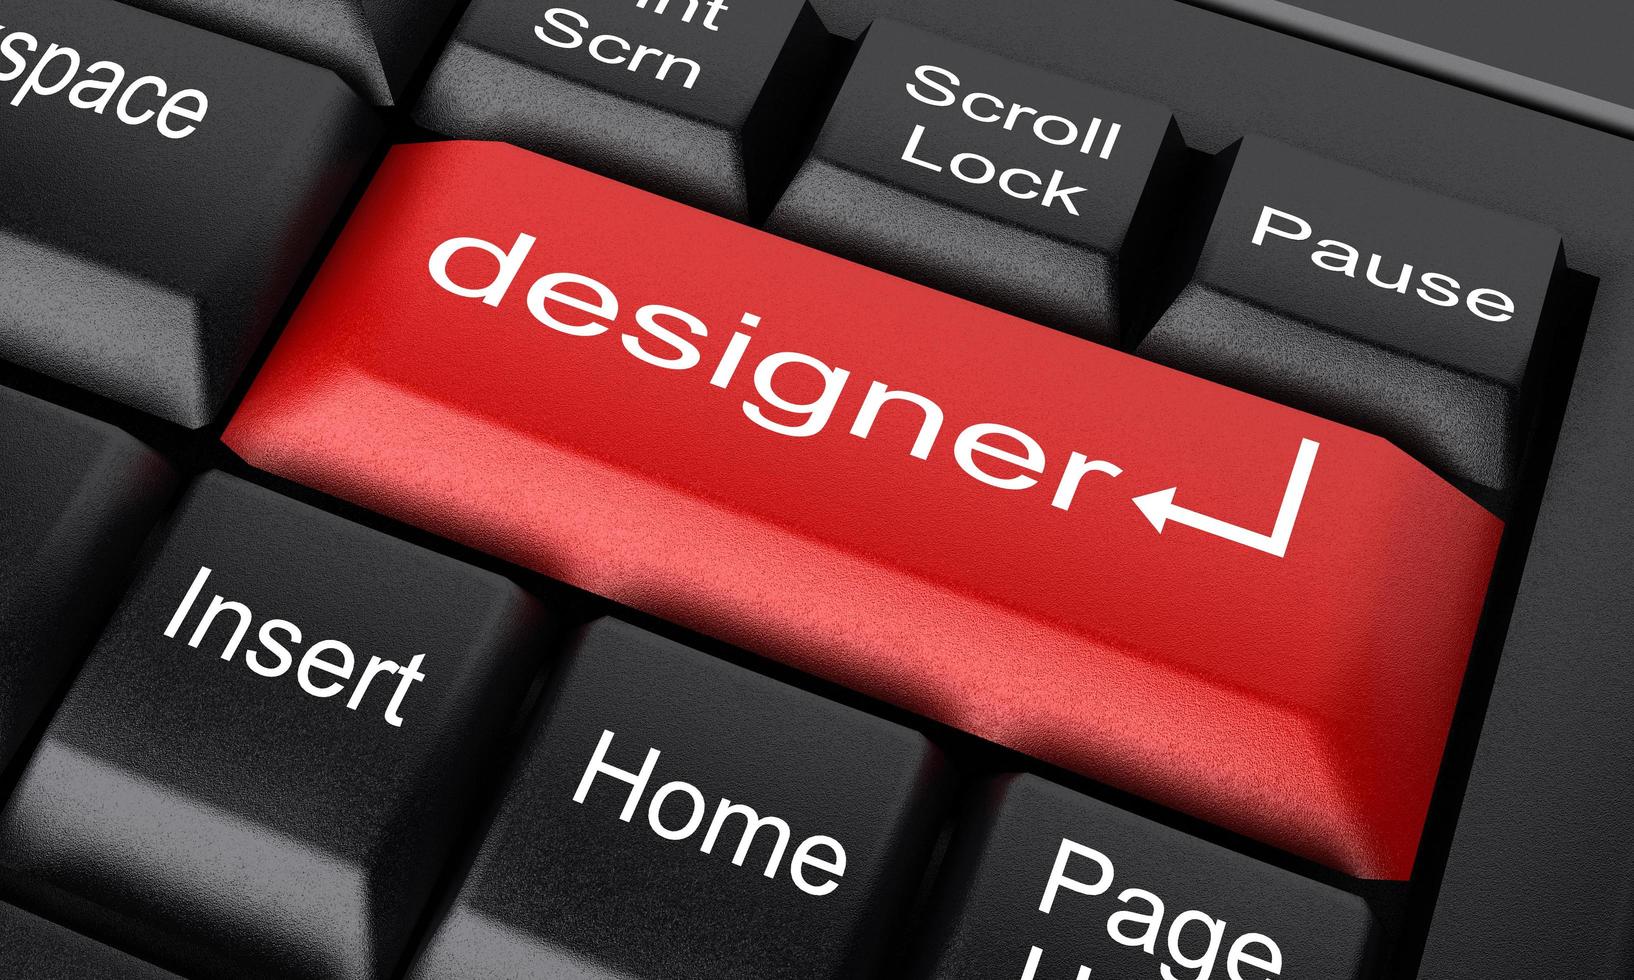 designer word on red keyboard button photo